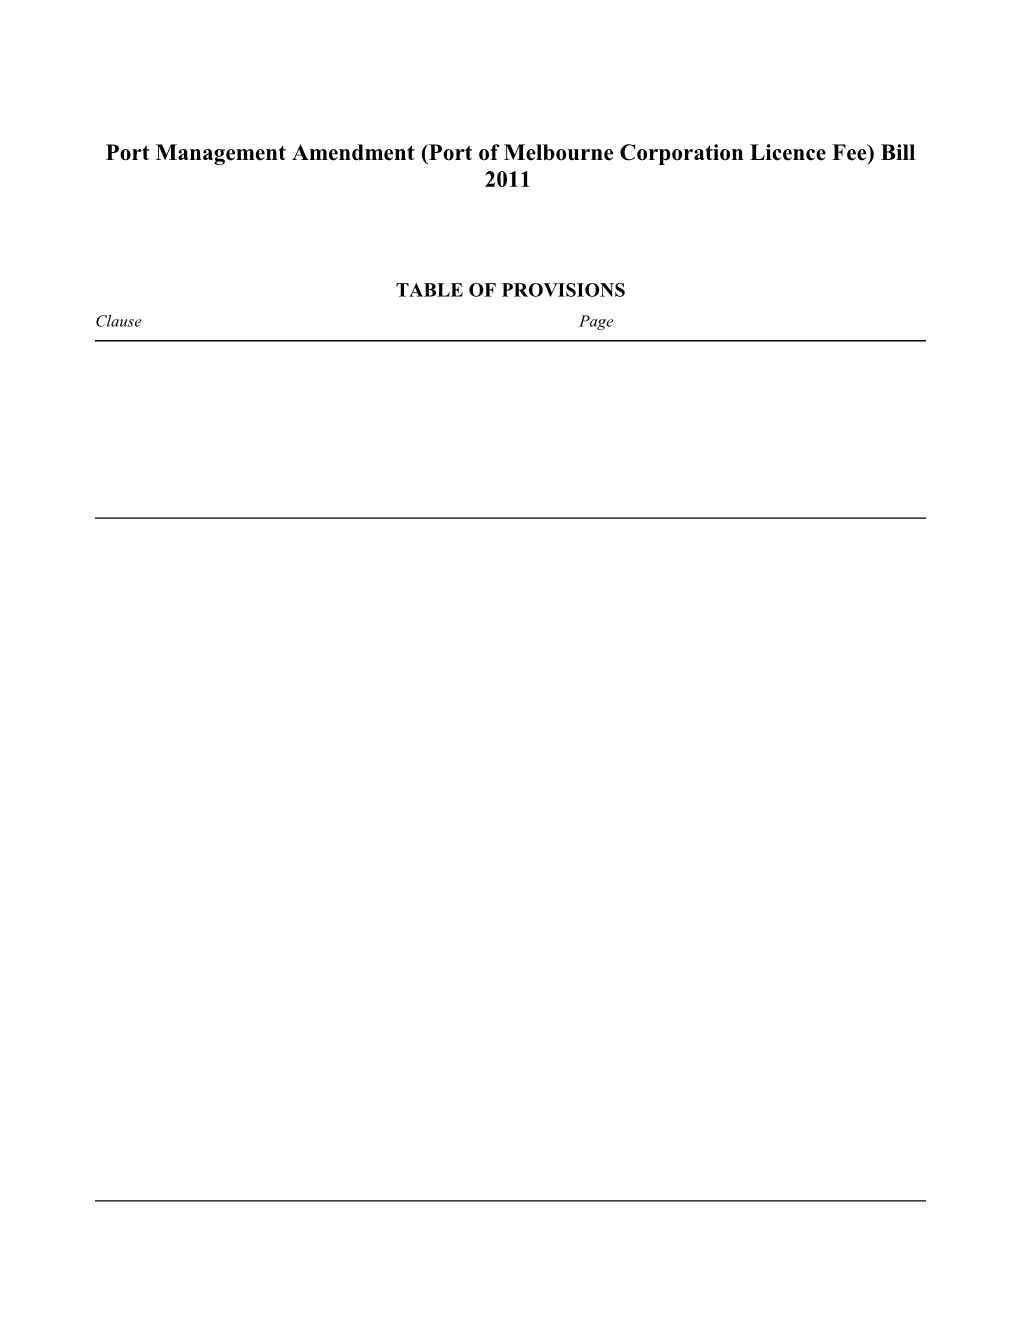 Port Management Amendment (Port of Melbourne Corporation Licence Fee) Bill 2011